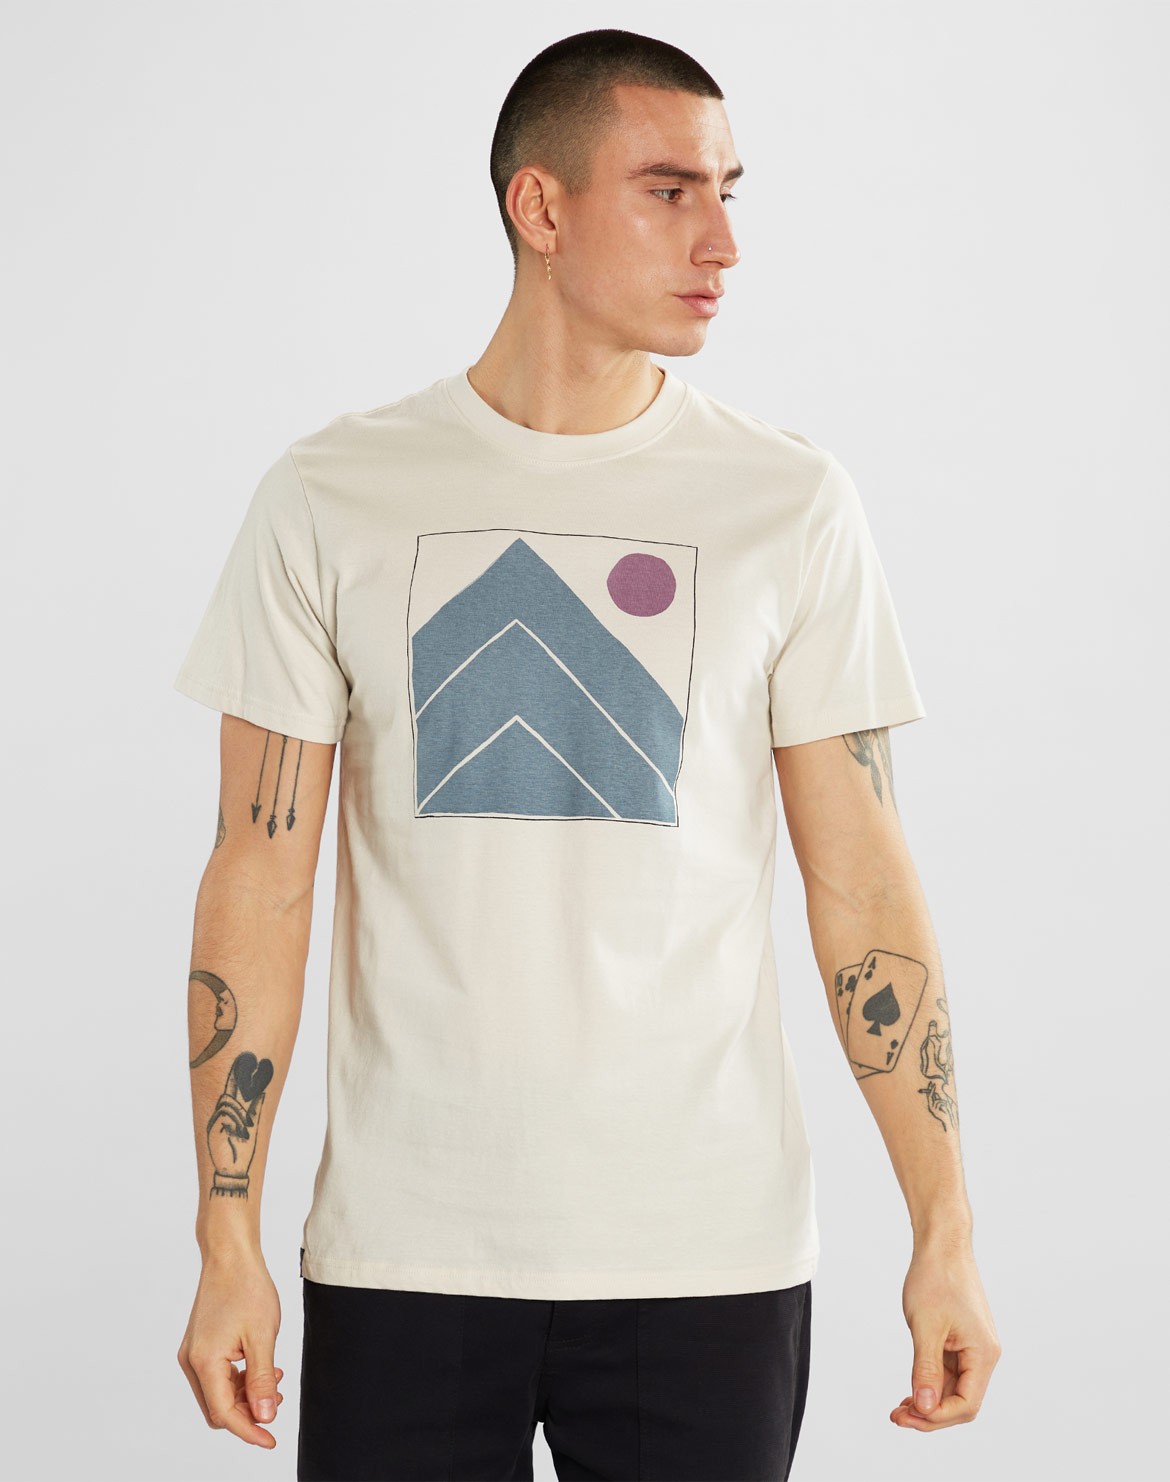 Stockholm Square Peaks T-Shirt